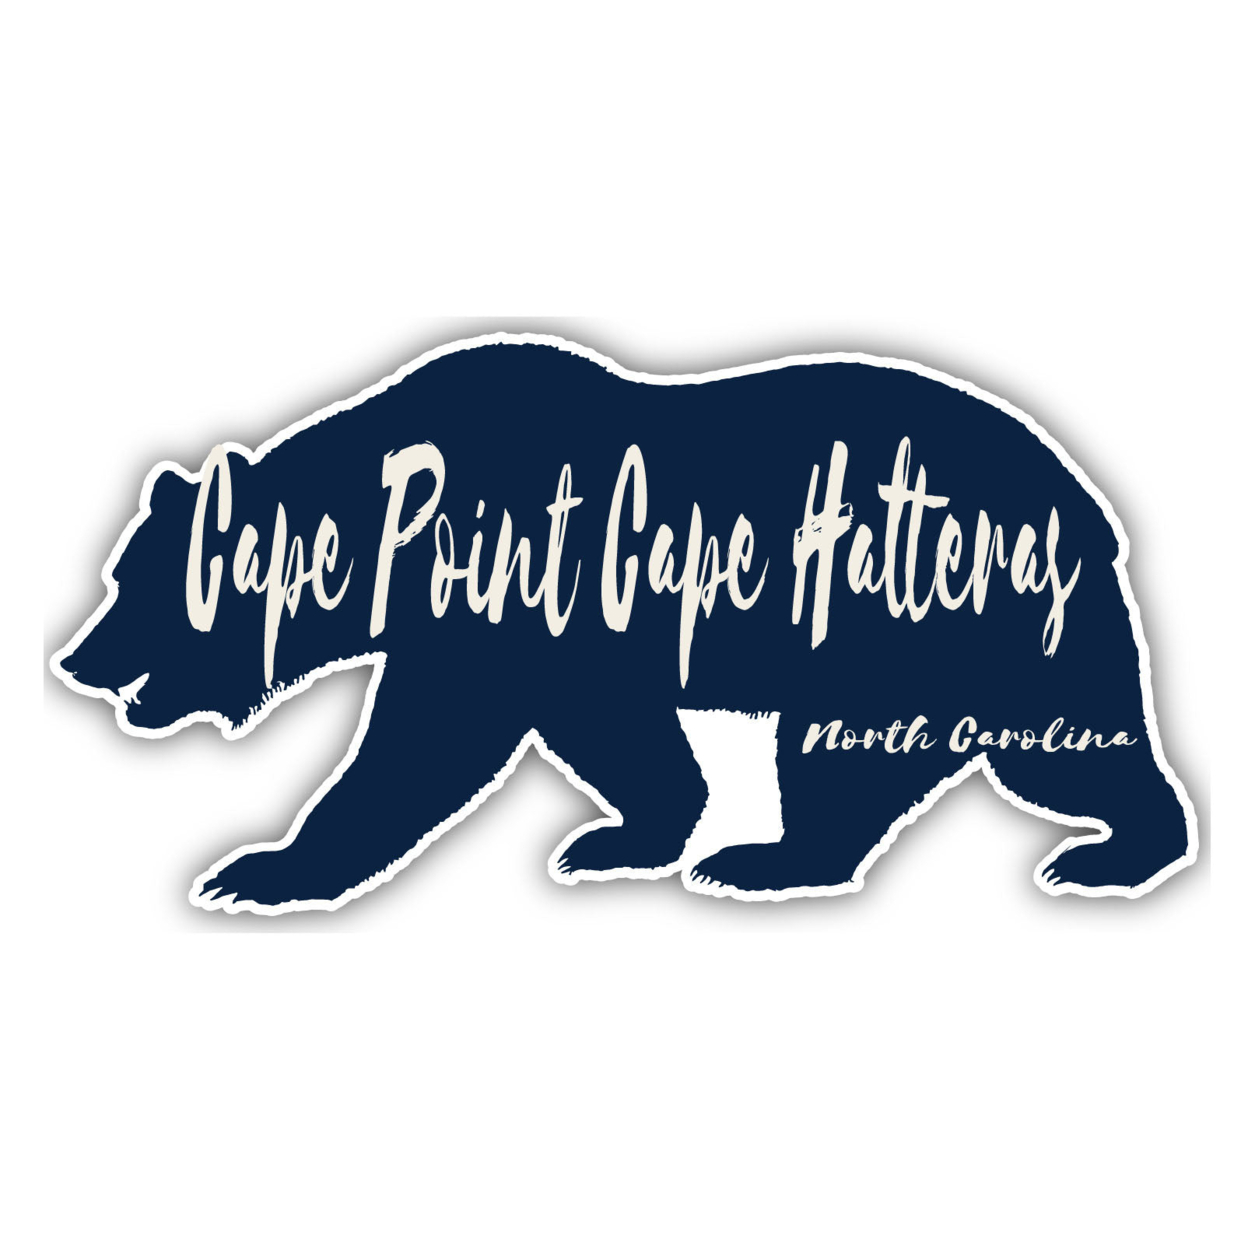 Cape Point Cape Hatteras North Carolina Souvenir Decorative Stickers (Choose Theme And Size) - Single Unit, 6-Inch, Bear